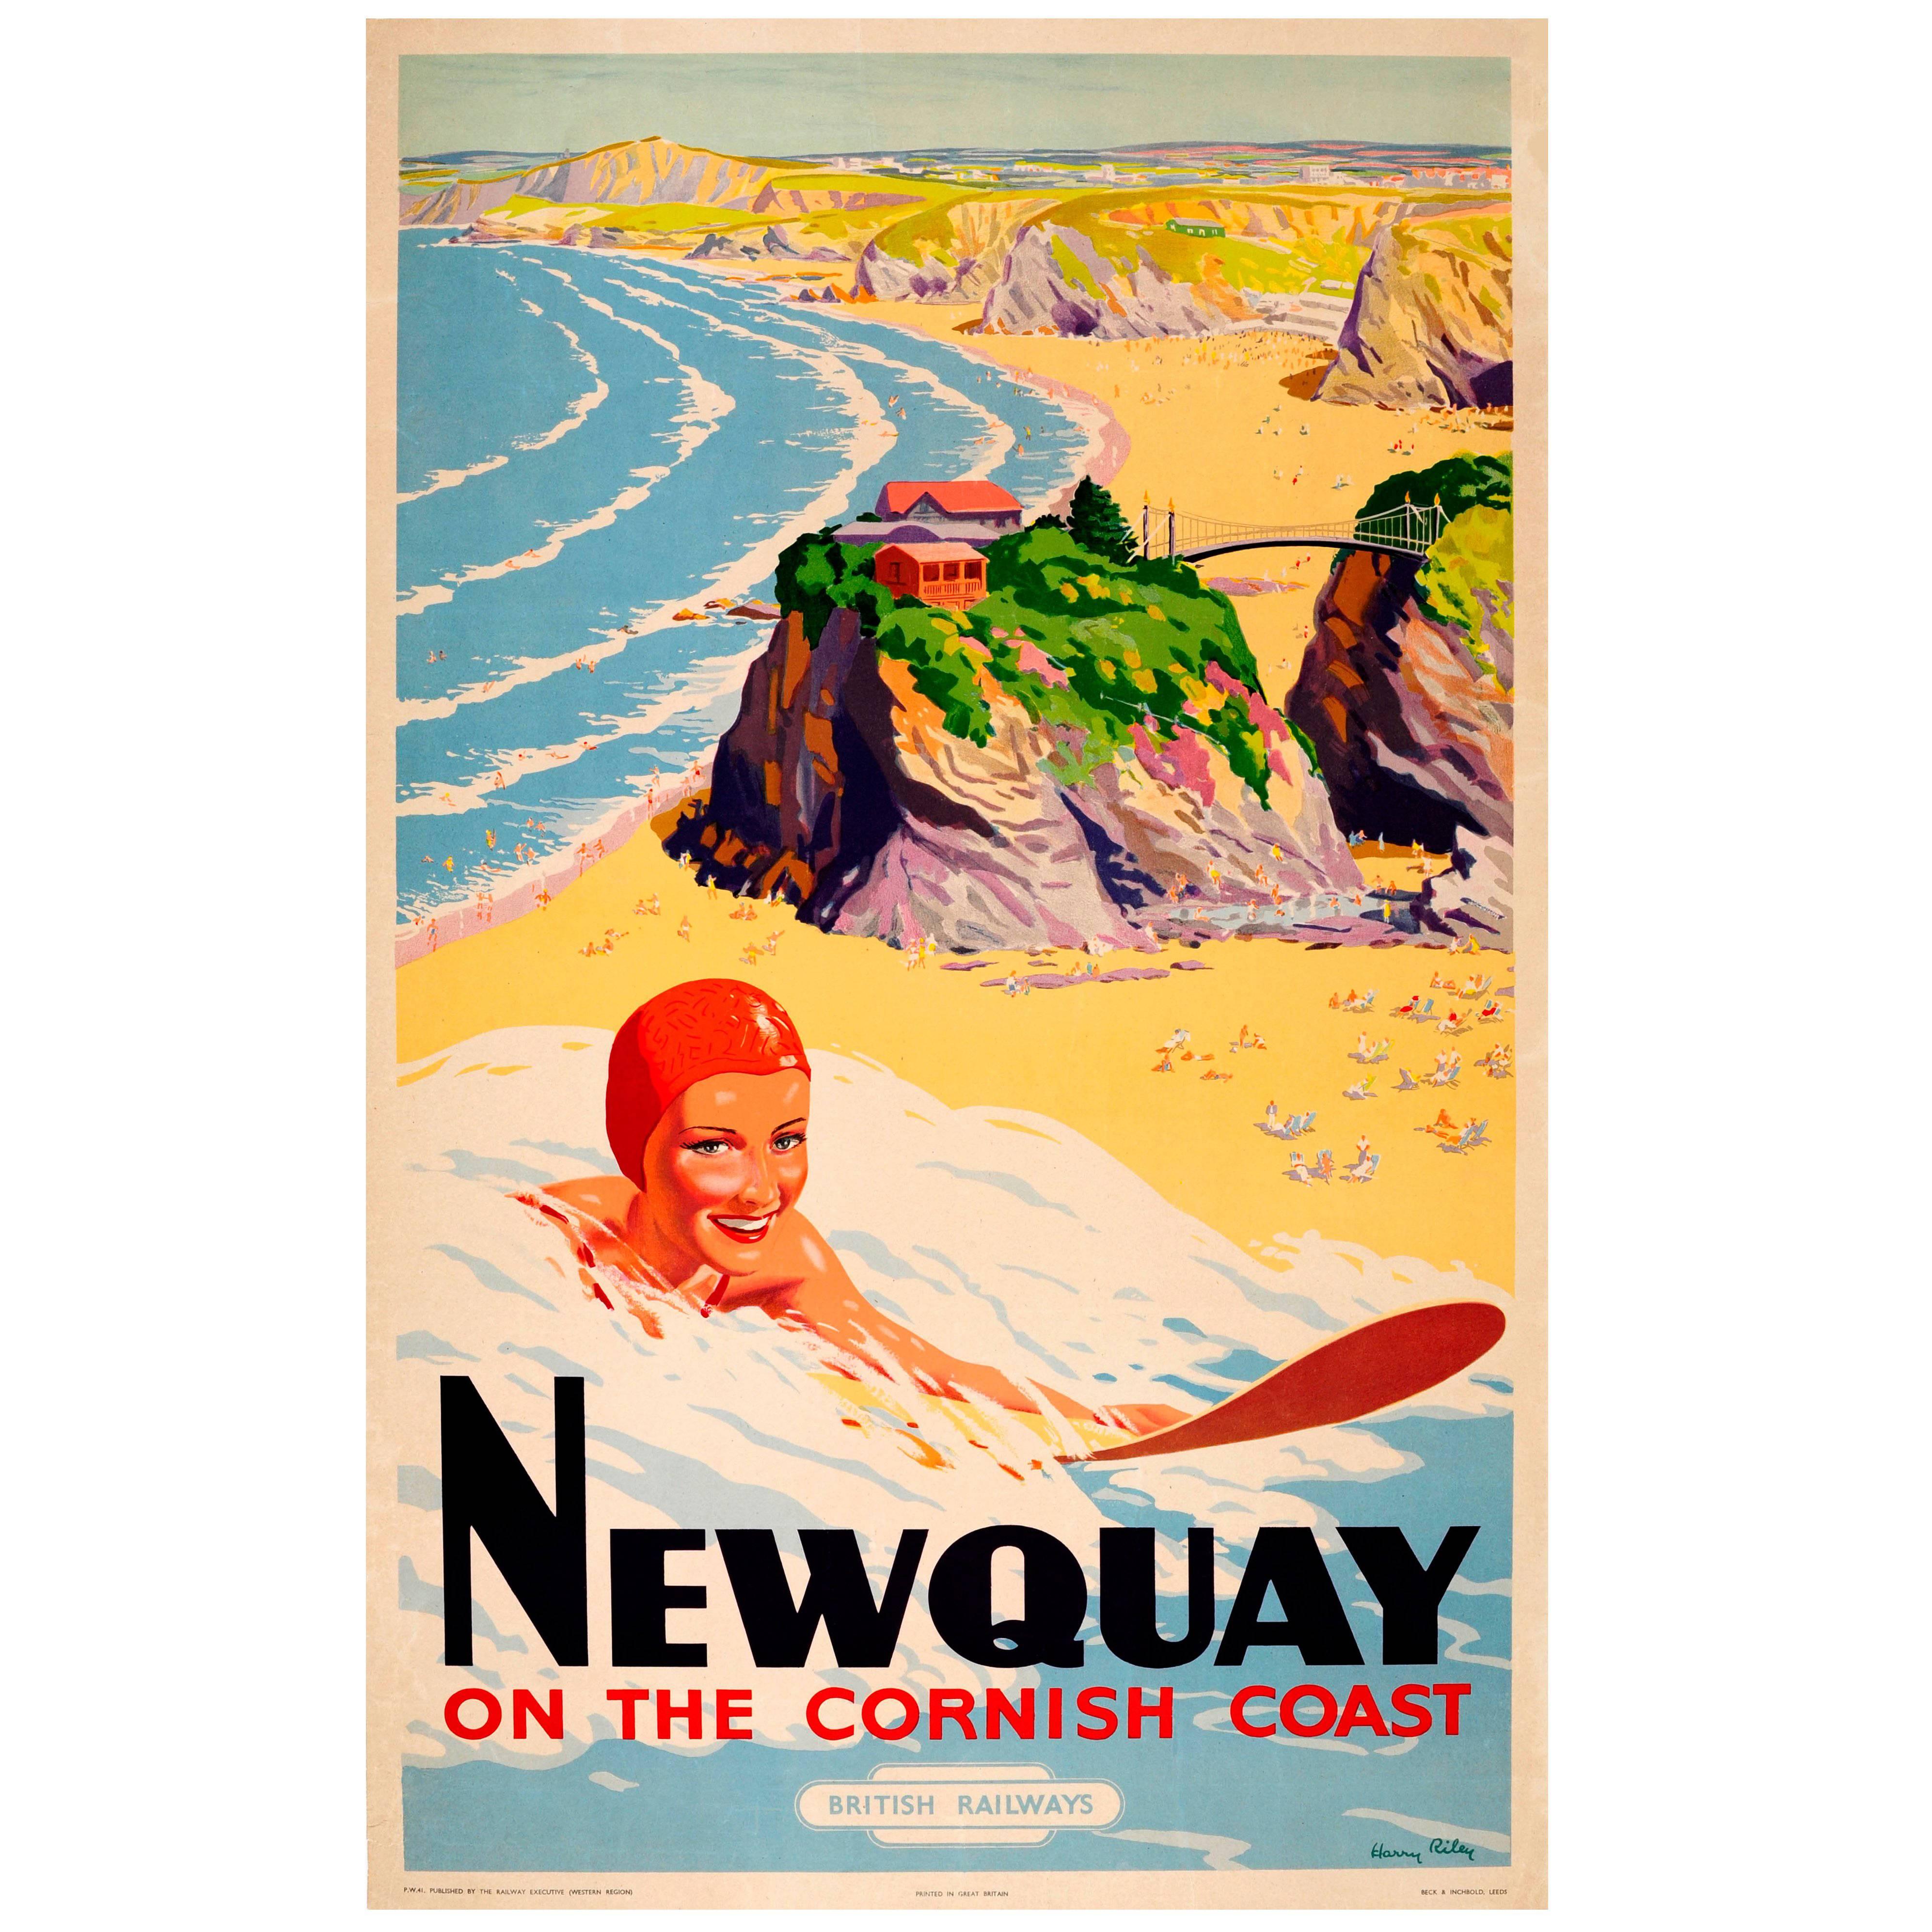 Original Cornwall Surfing Poster - Newquay on the Cornish Coast British Railways